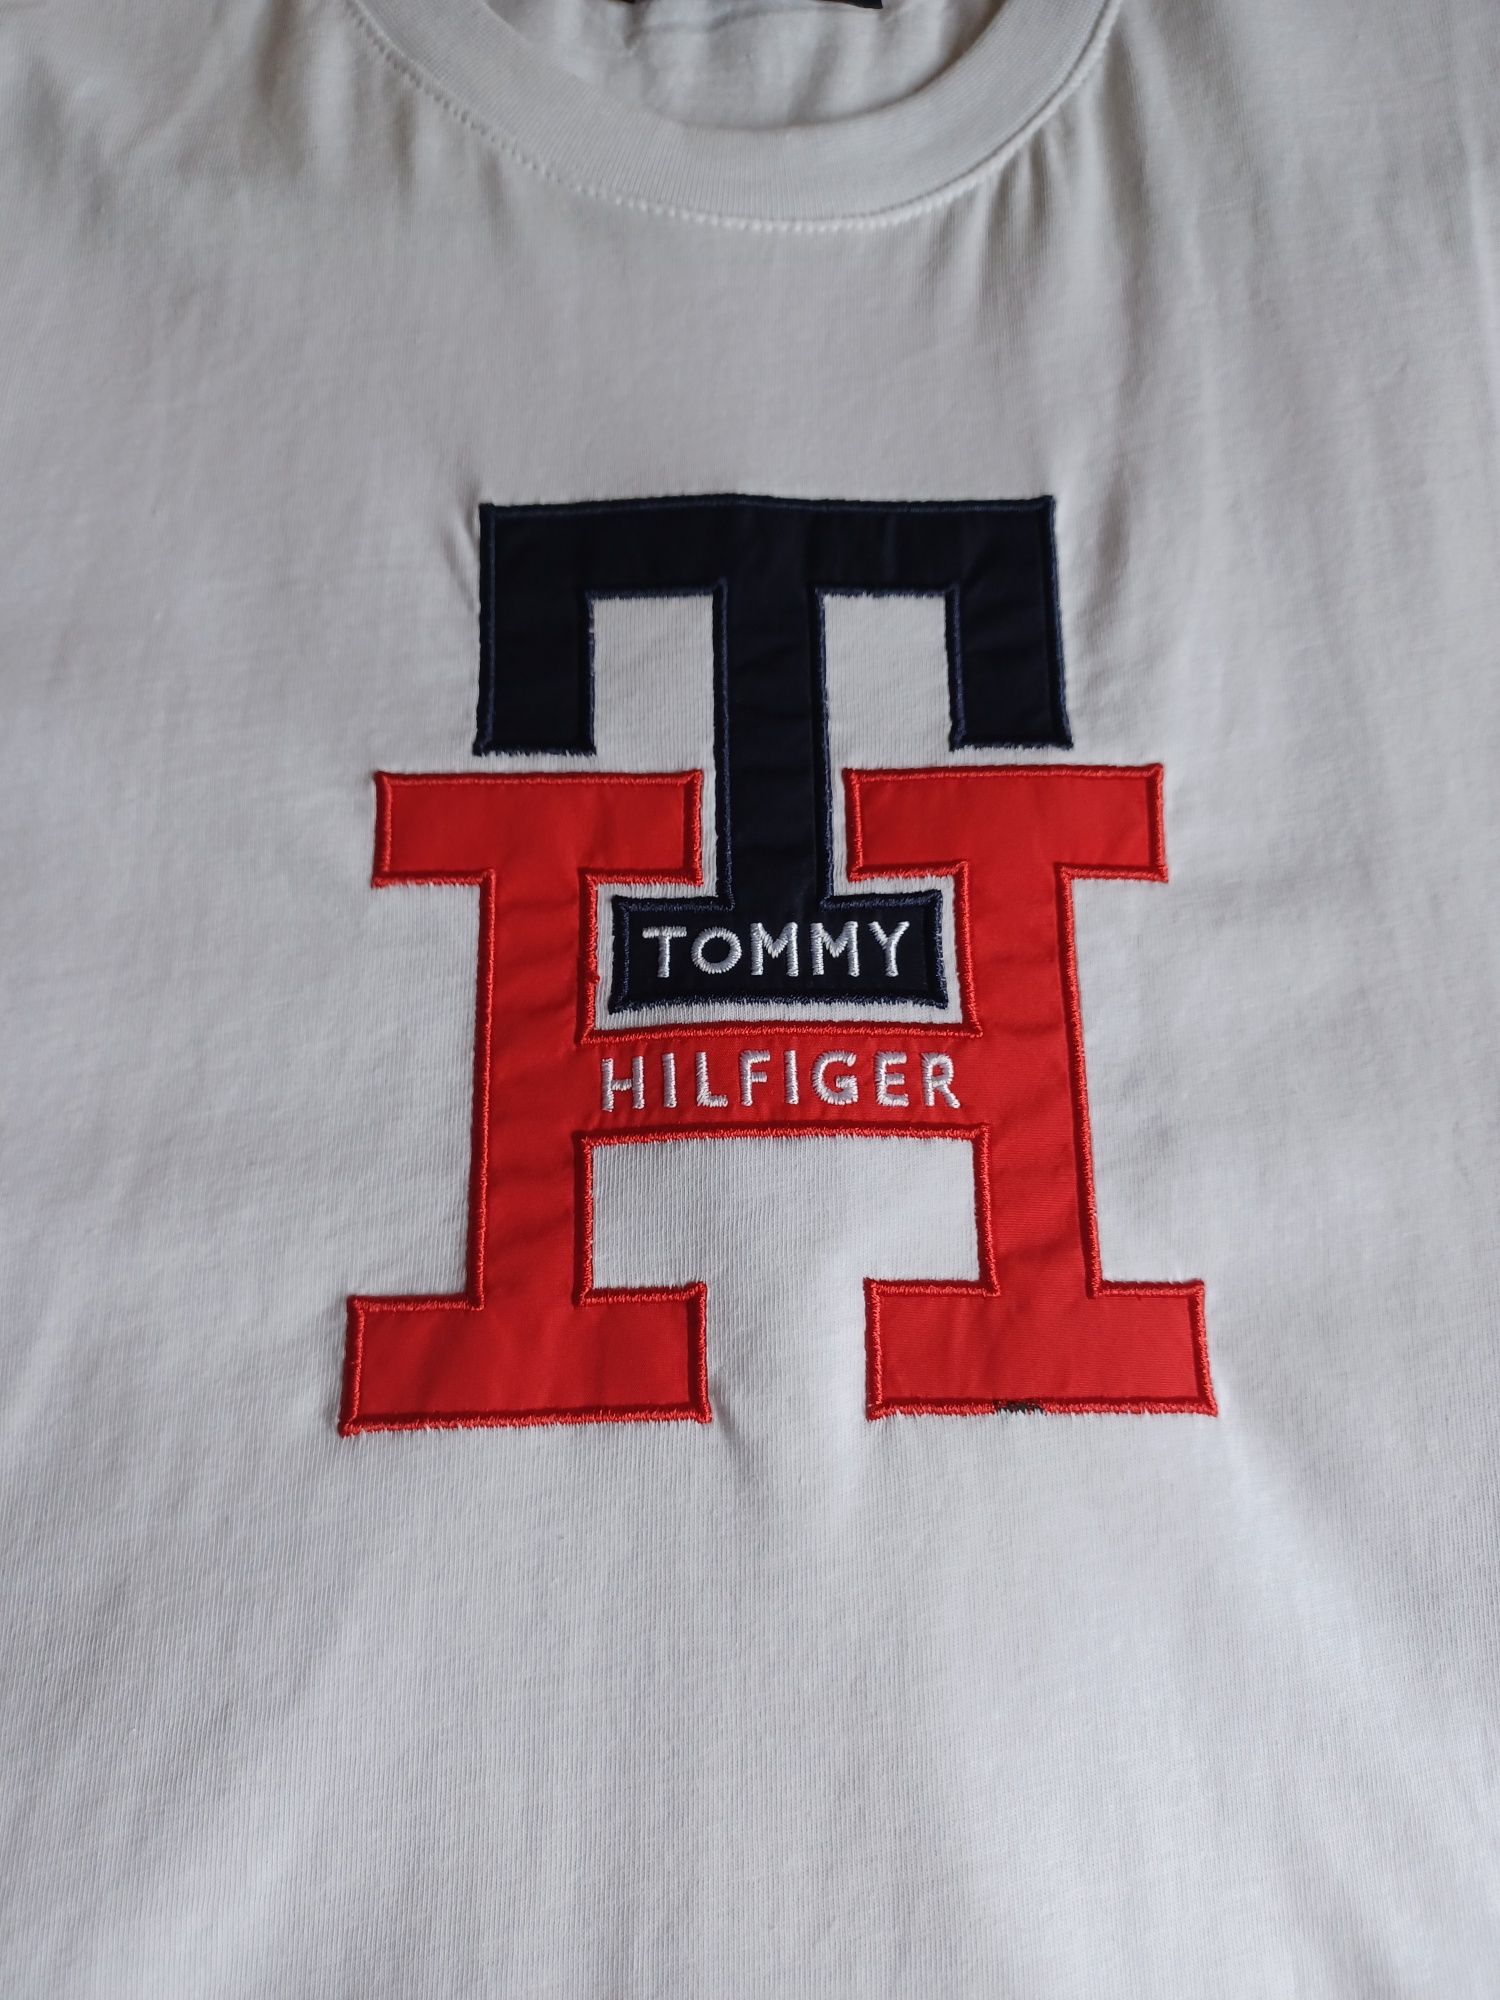 Koszulka męska Tommy Hilfiger. Nowa. Oryginalna!